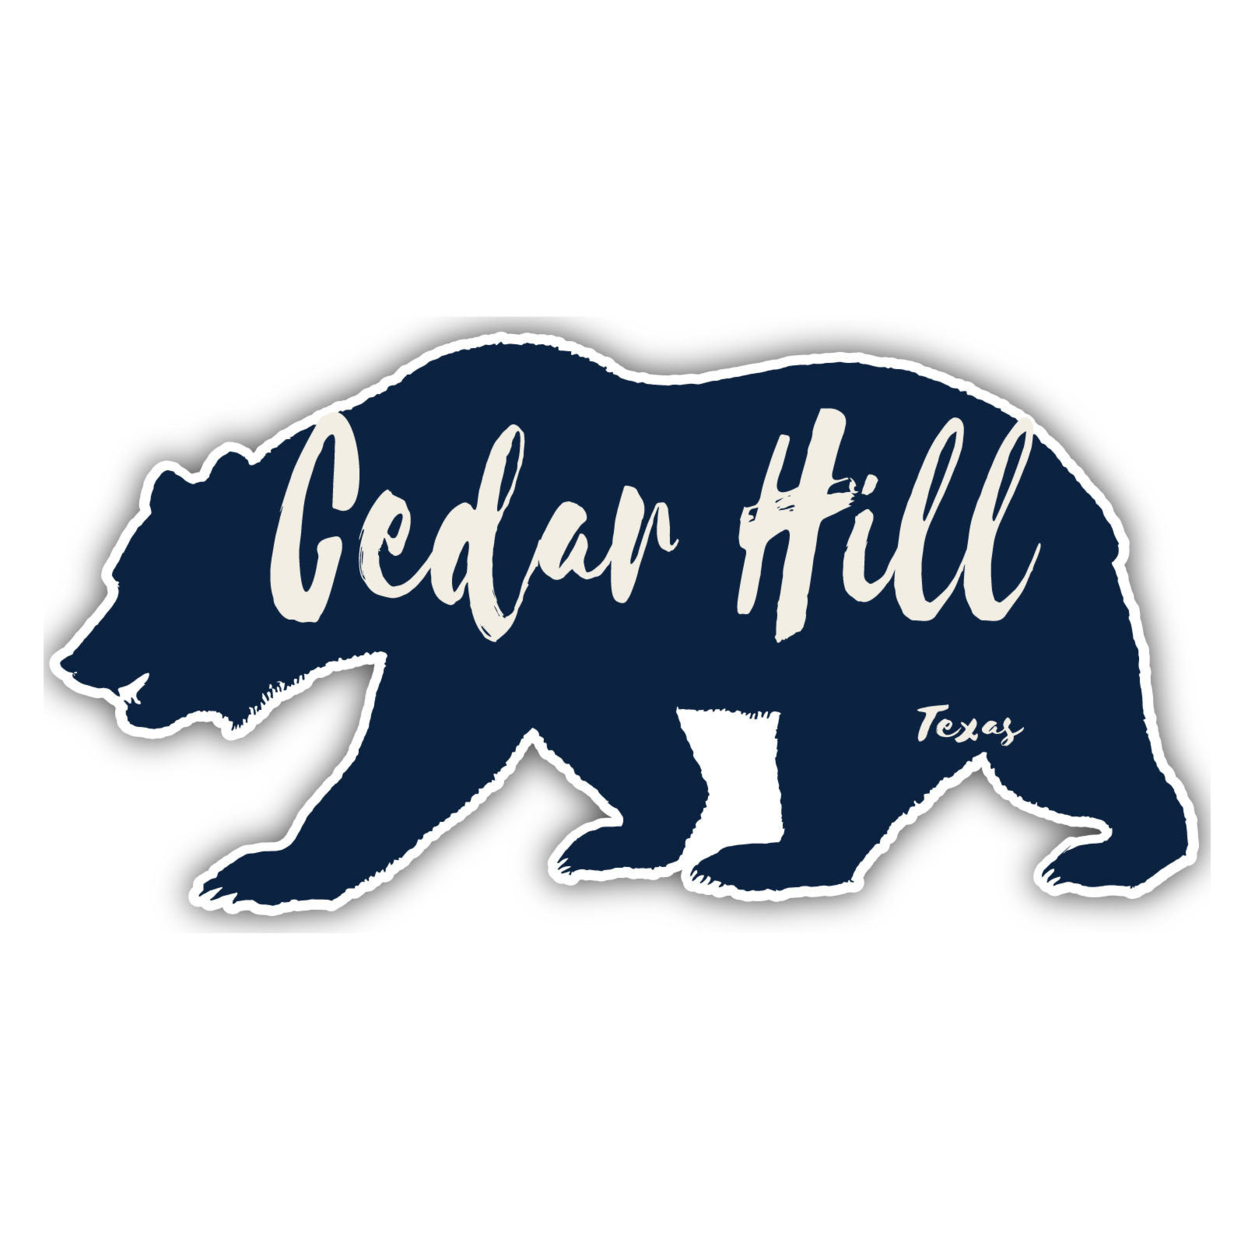 Cedar Hill Texas Souvenir Decorative Stickers (Choose Theme And Size) - Single Unit, 10-Inch, Bear